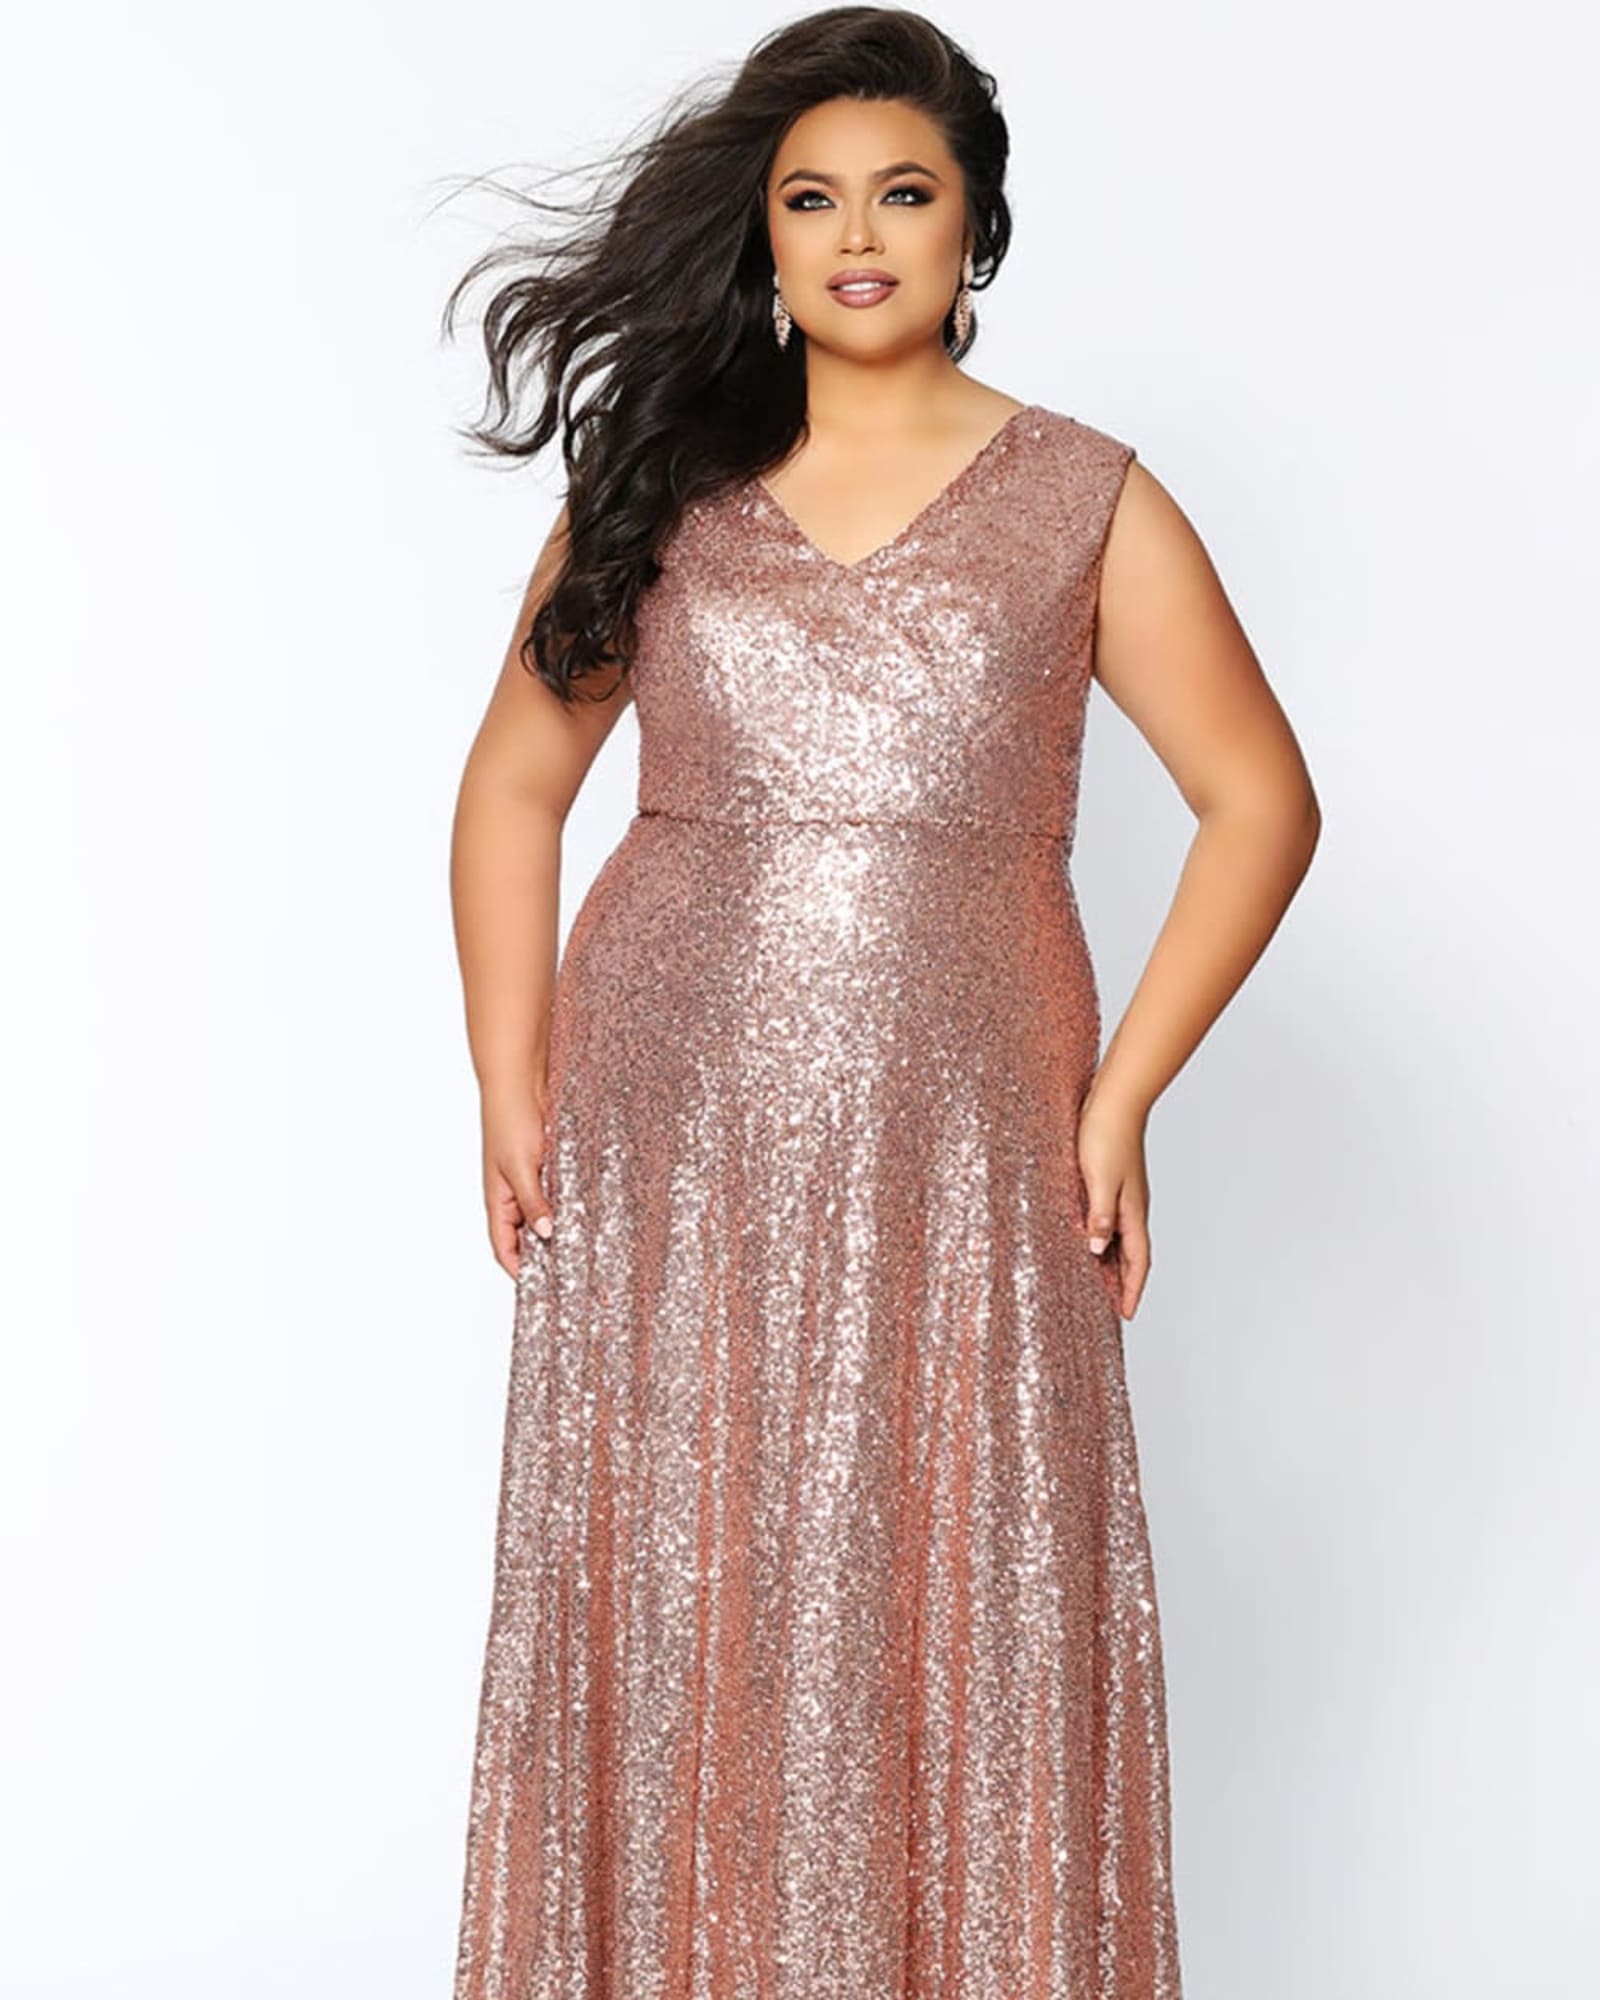 Abbey Gold Wrap Dress - New York & Company | Plus size fashion dresses,  Plus size cocktail dresses, Plus size tunic dress